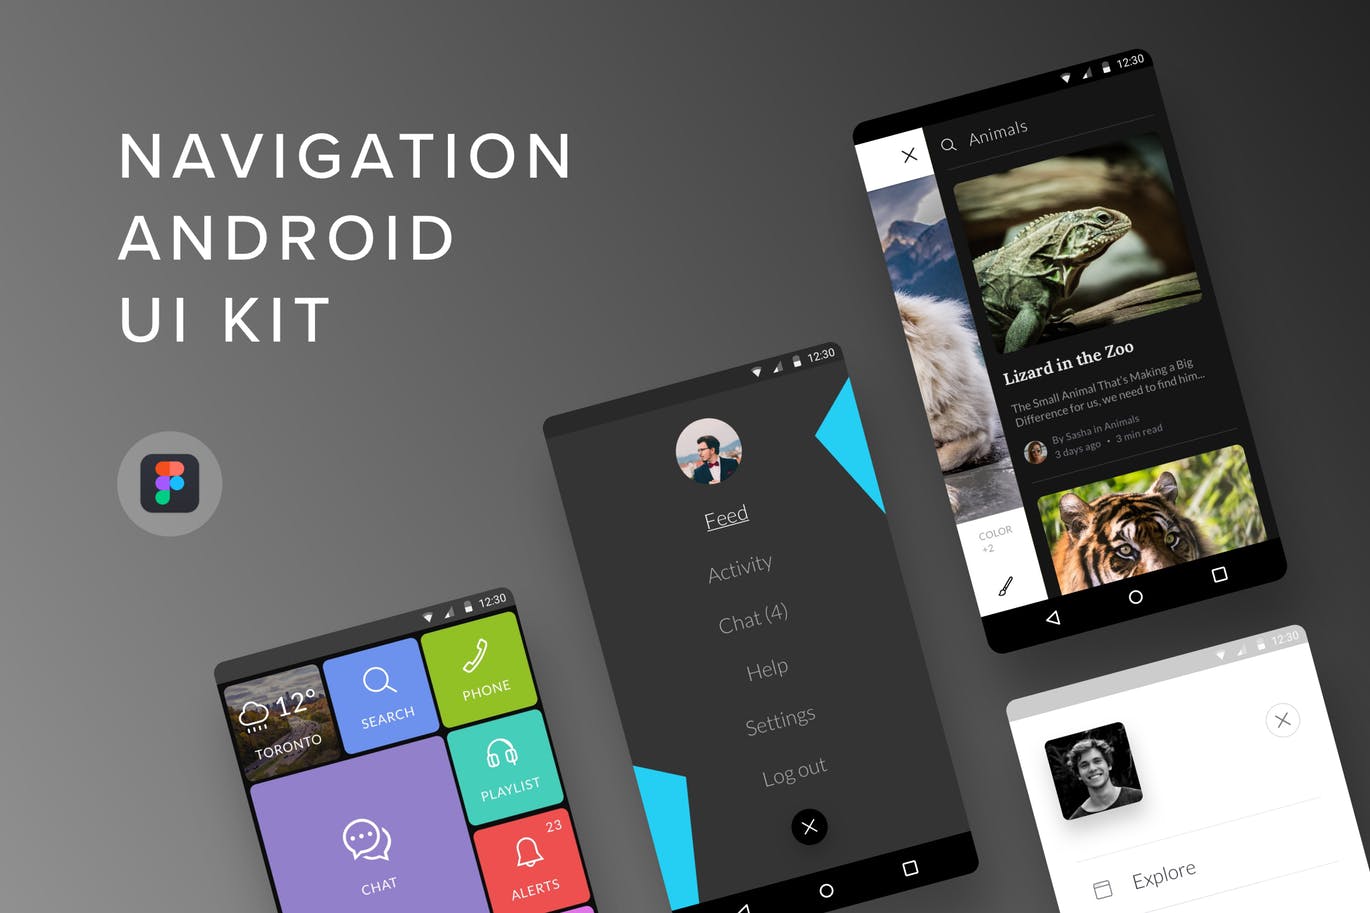 Android平台APP应用导航菜单设计Figma模板 Navigation Android UI Kit (Figma)插图